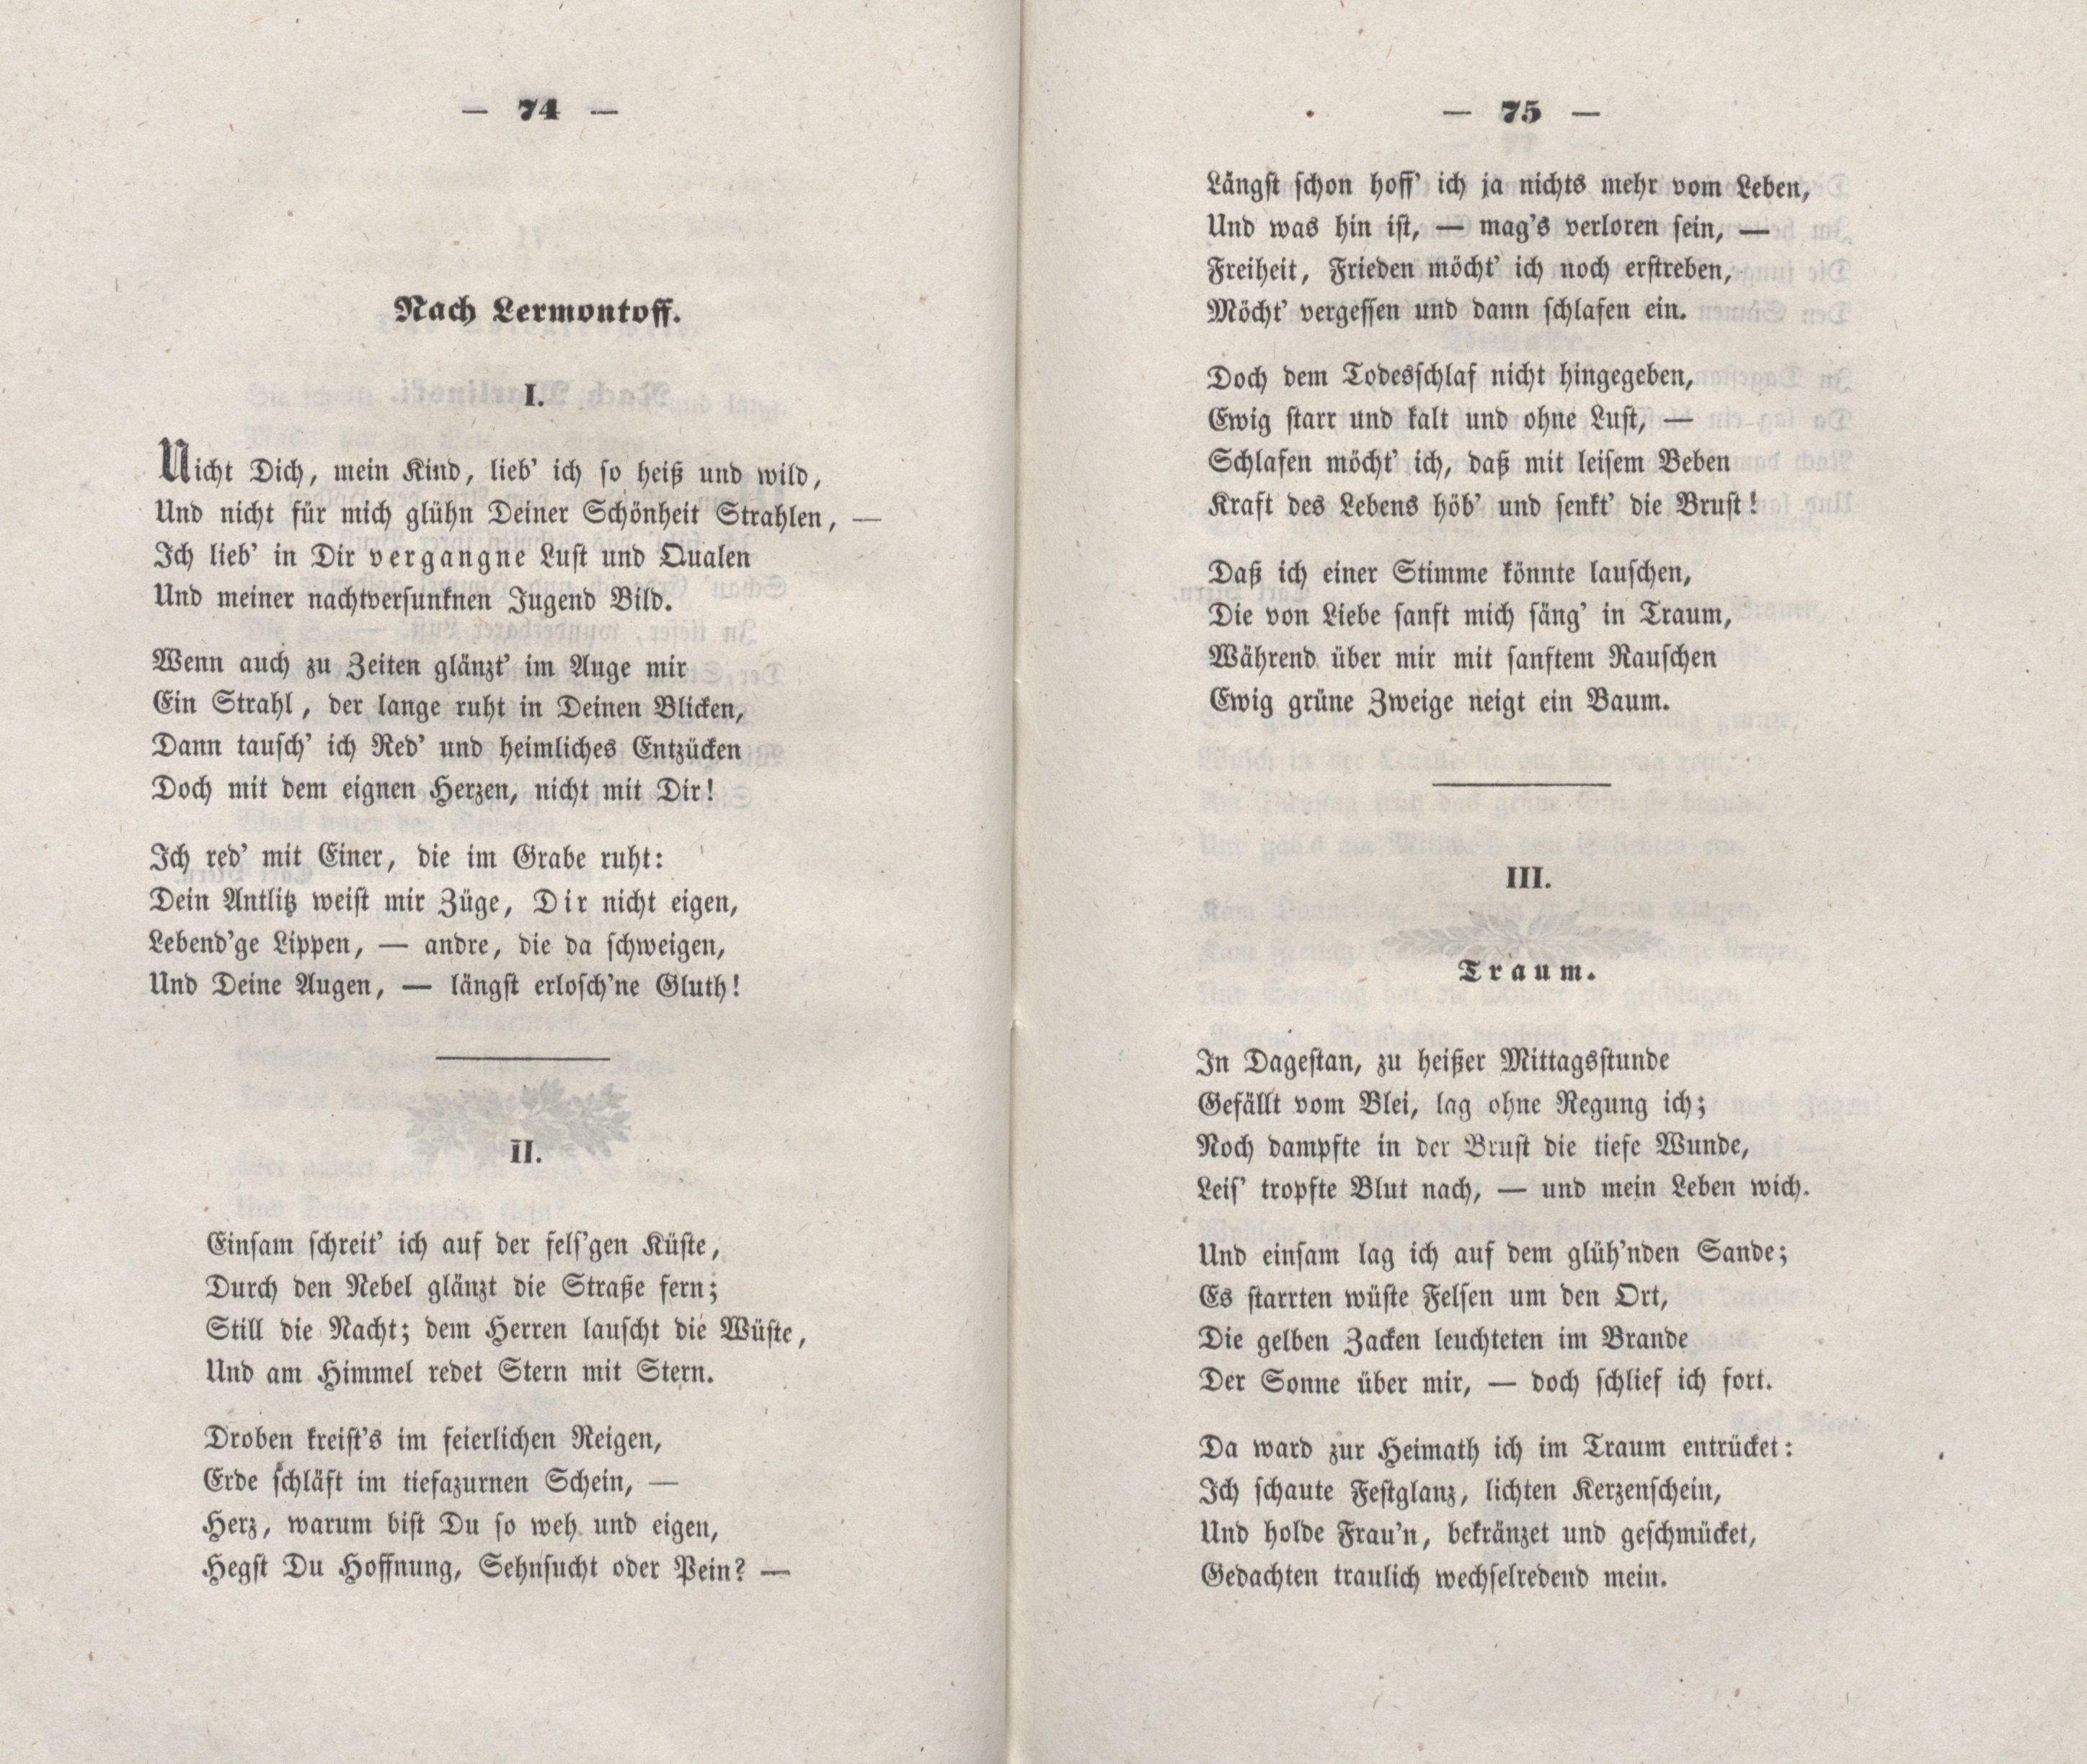 Nach Lermontoff (1848) | 1. (74-75) Main body of text